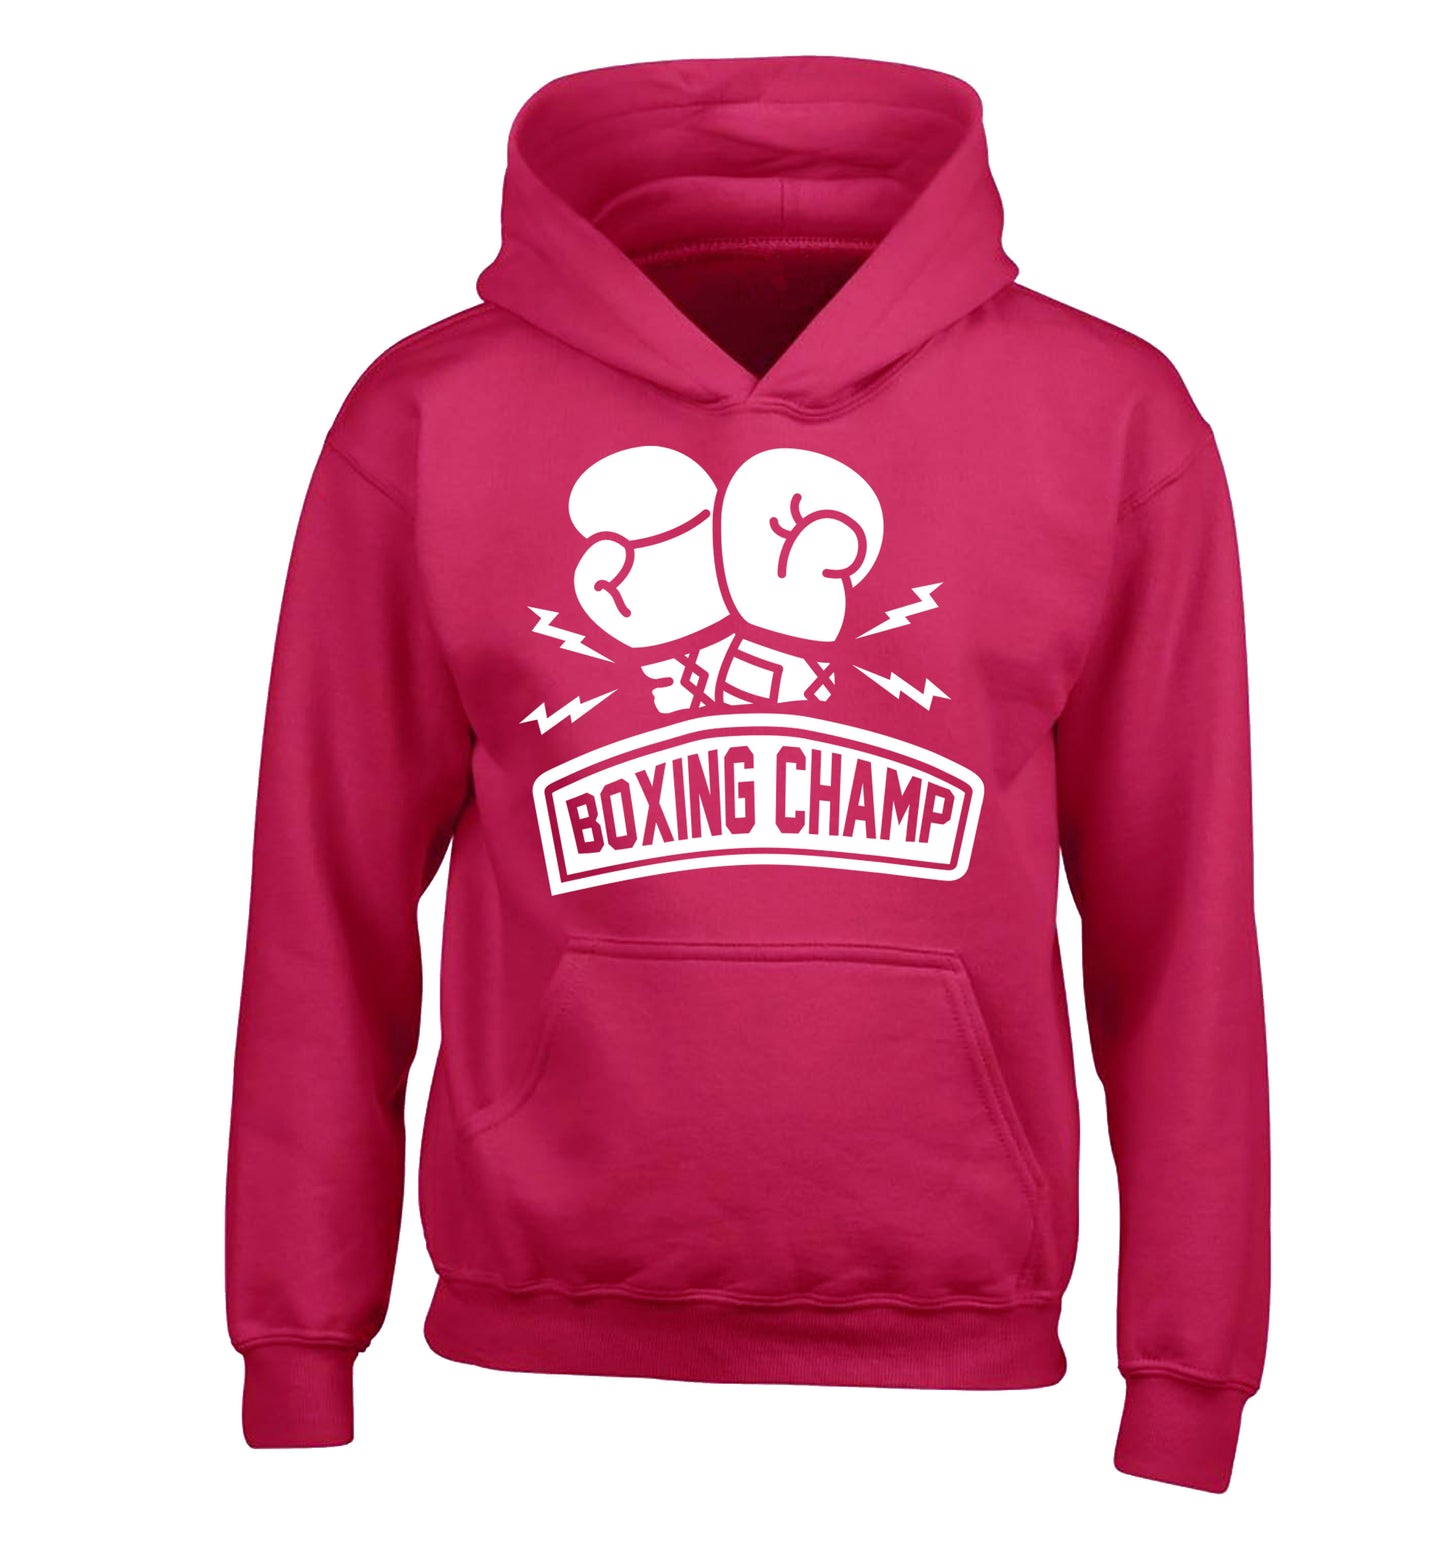 Boxing Champ children's pink hoodie 12-13 Years